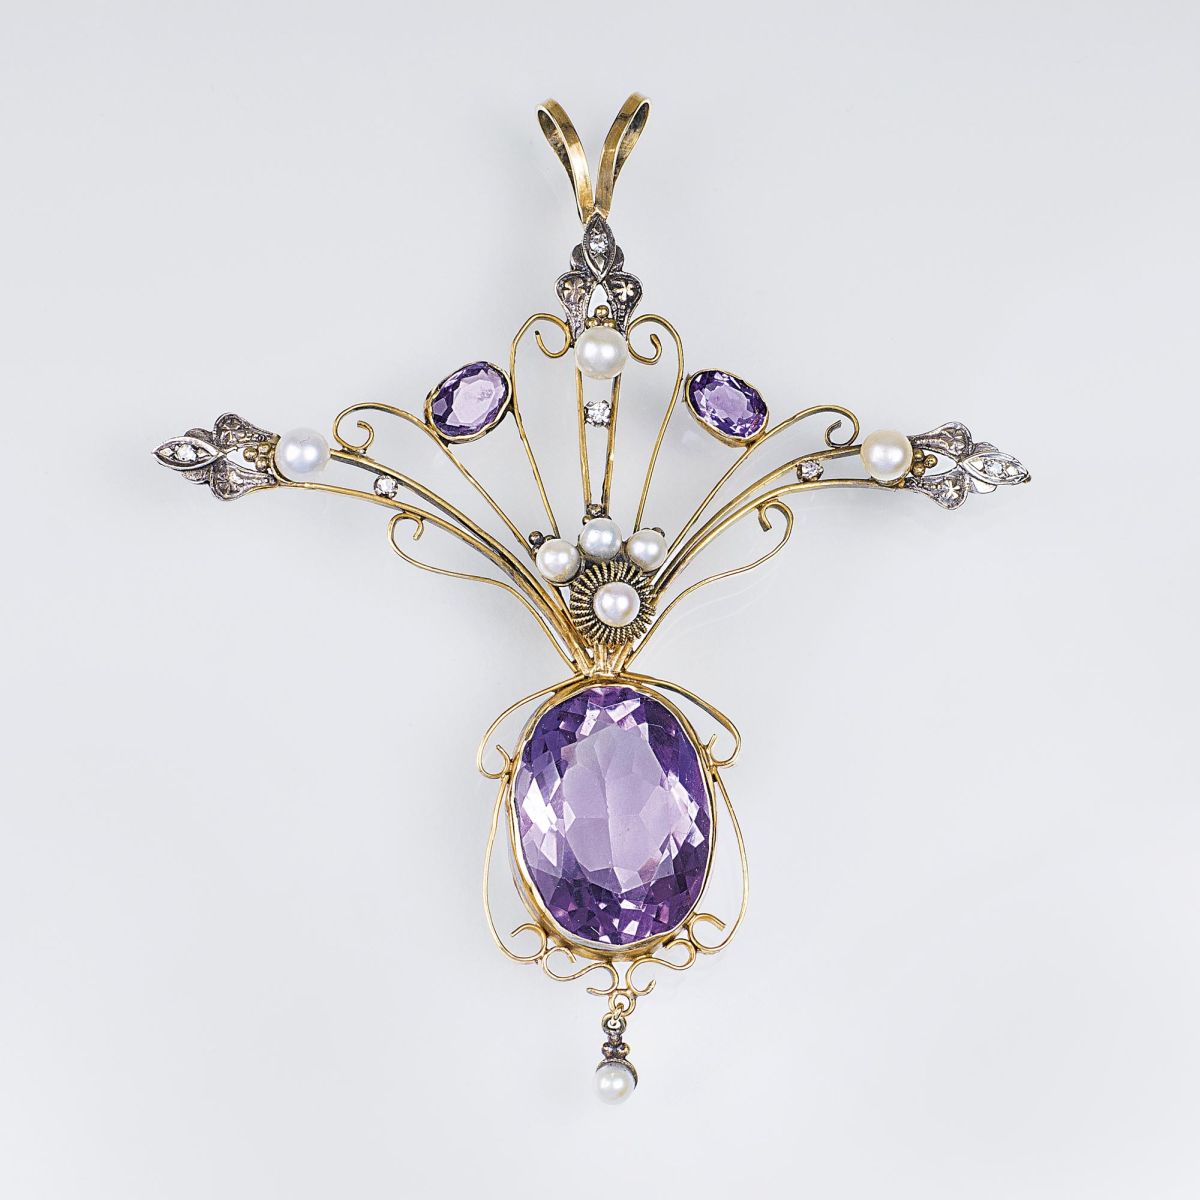 A delicate Art Nouveau Amethyst Pearl Brooch